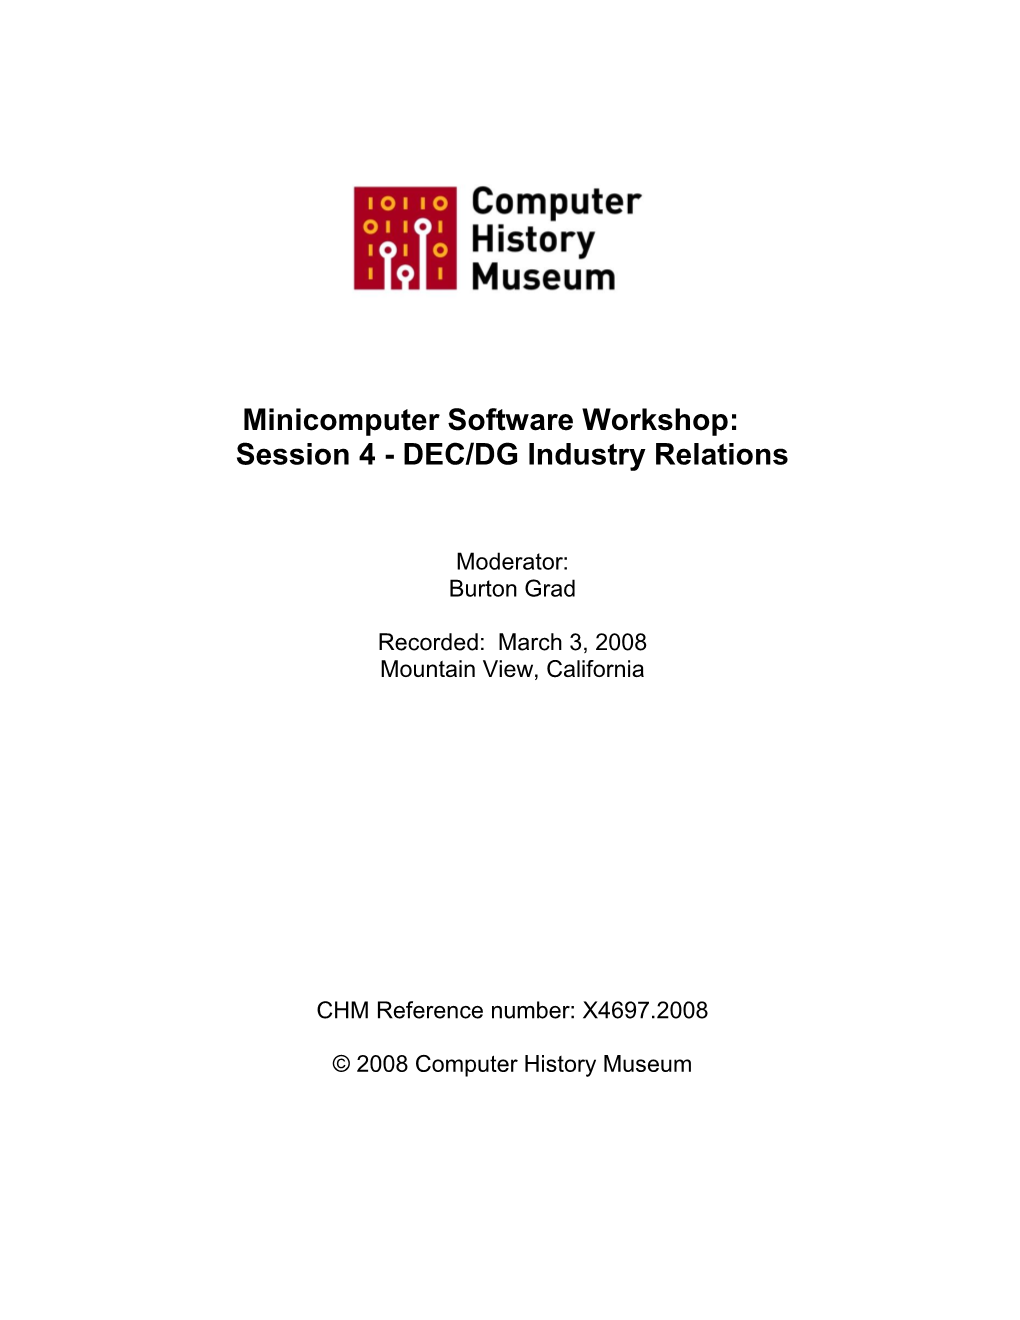 Minicomputer Software Workshop: Session 4 - DEC/DG Industry Relations